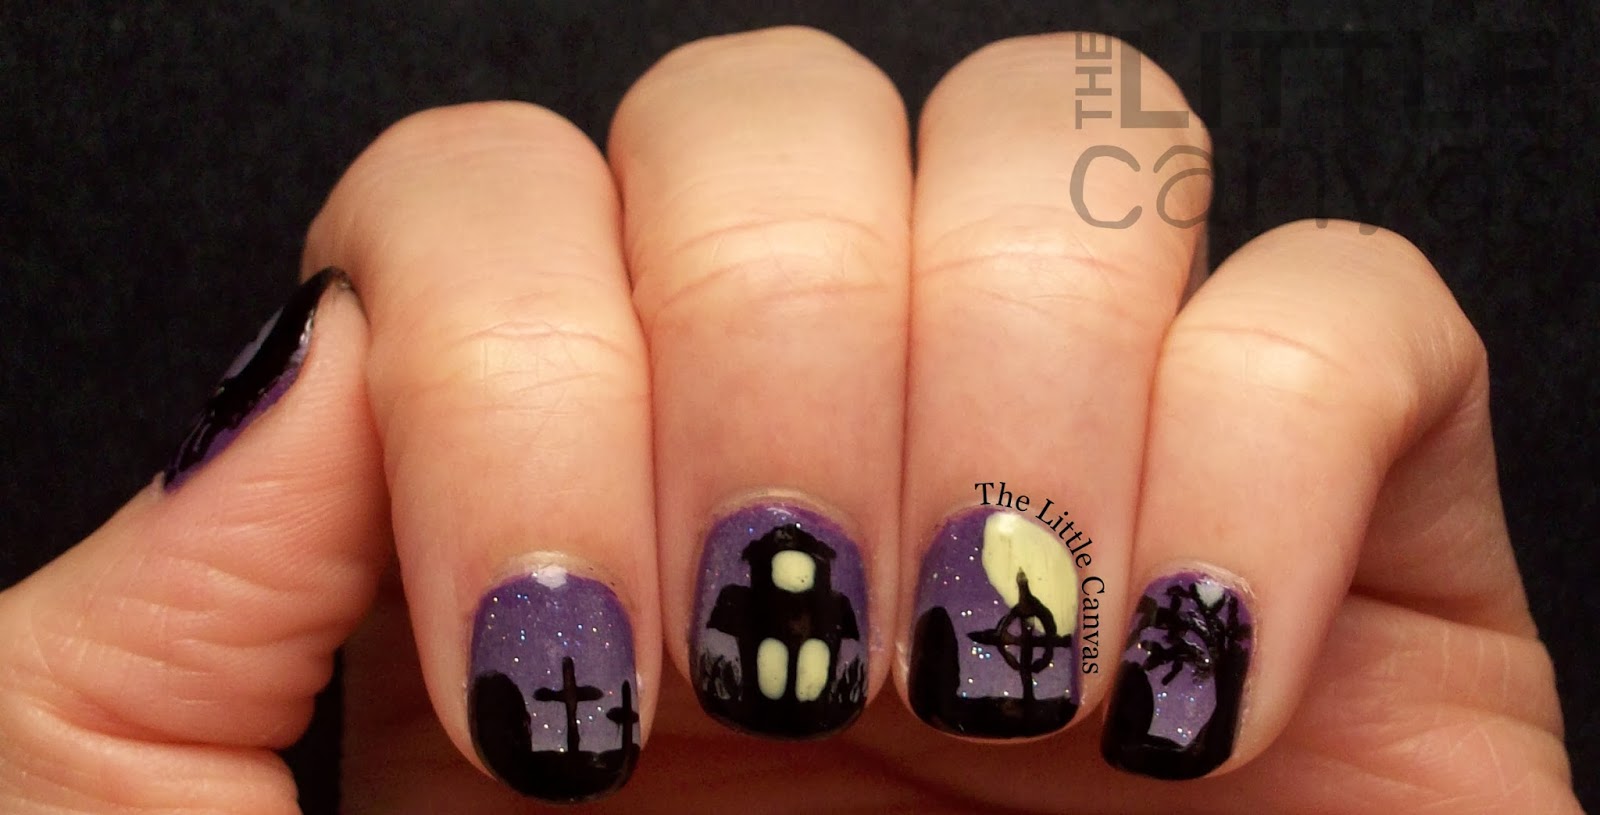 10. "Halloween Nail Art Tutorial: Haunted Graveyard Nails" - wide 3